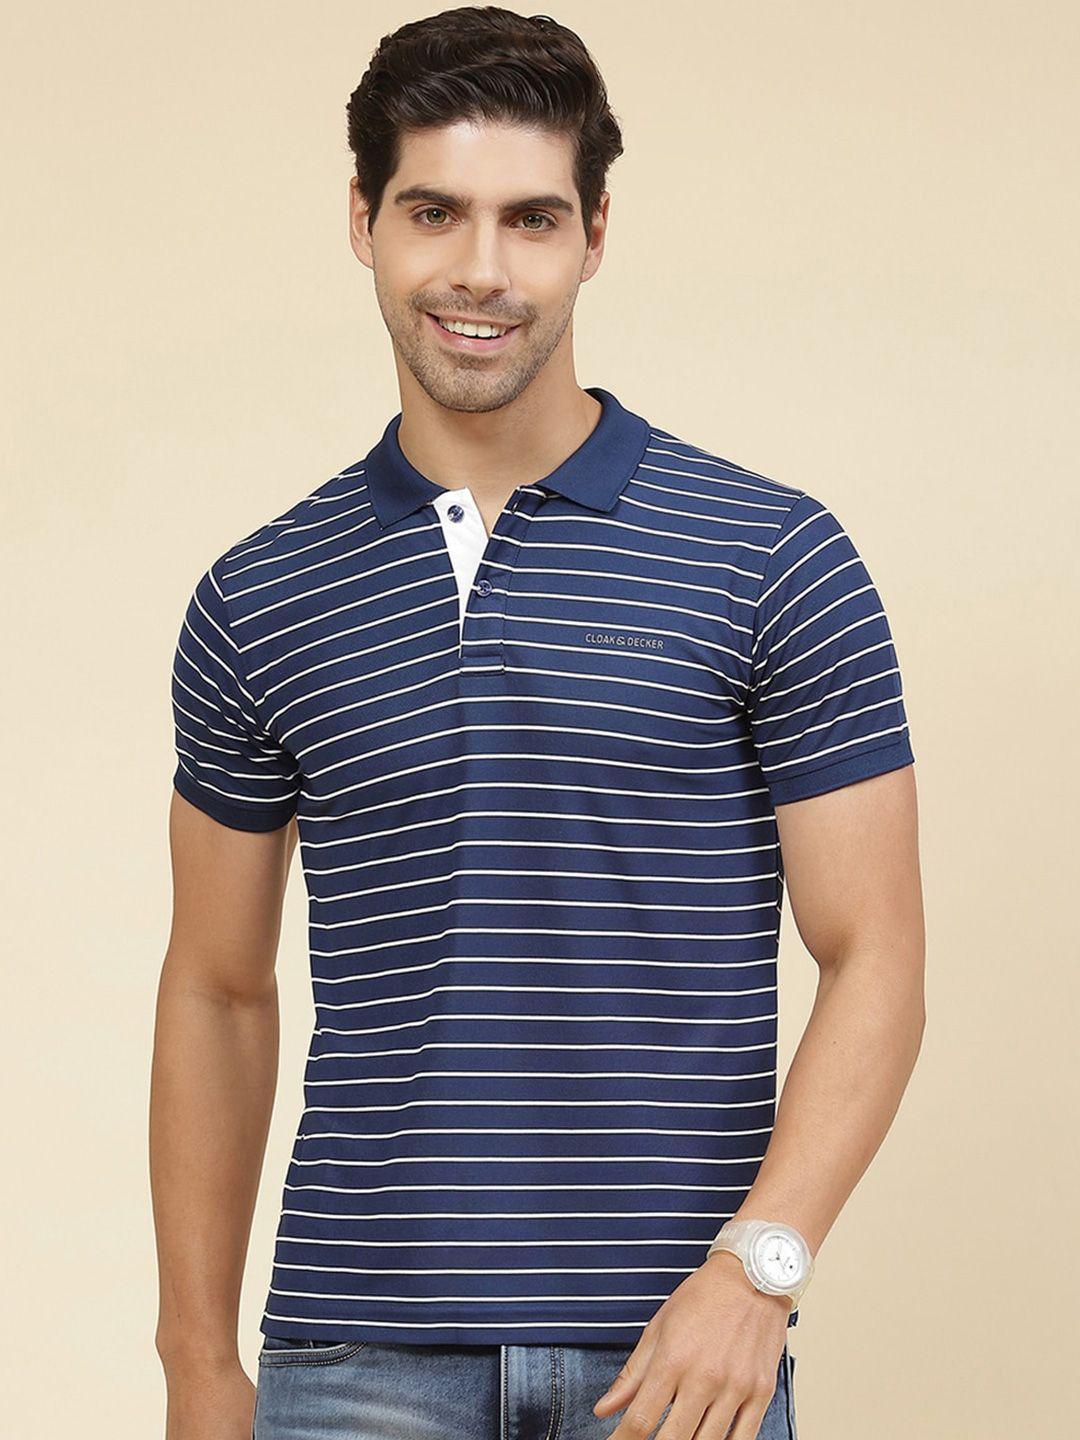 cloak & decker by monte carlo striped polo collar cotton t-shirt